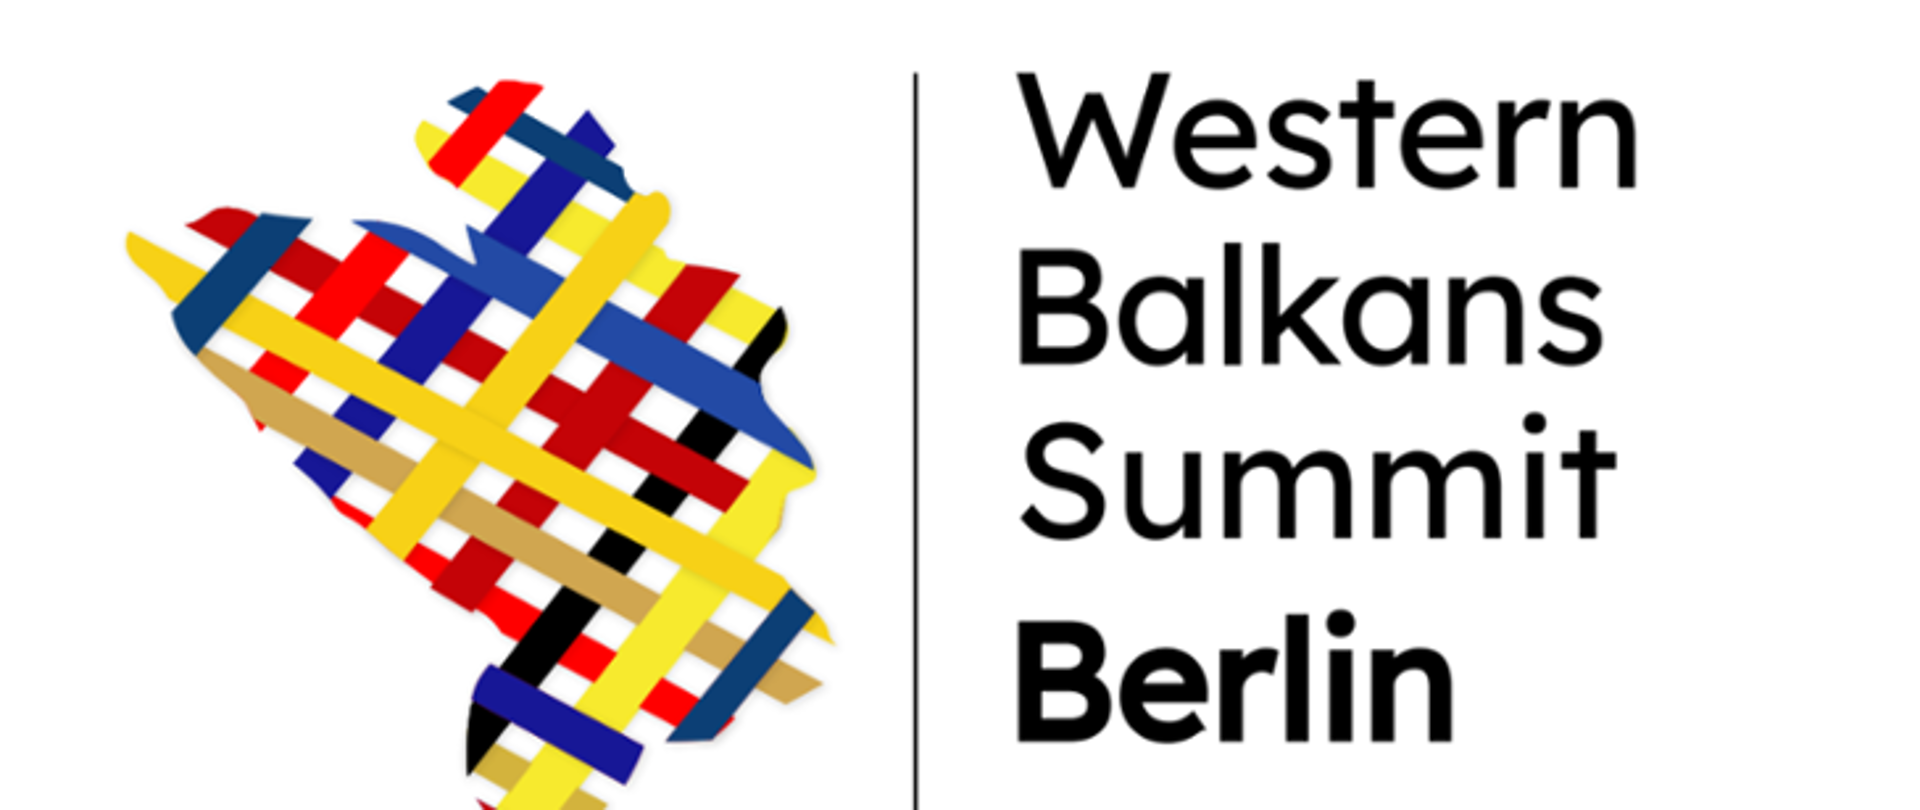 Western Balkans Summit Berlin.